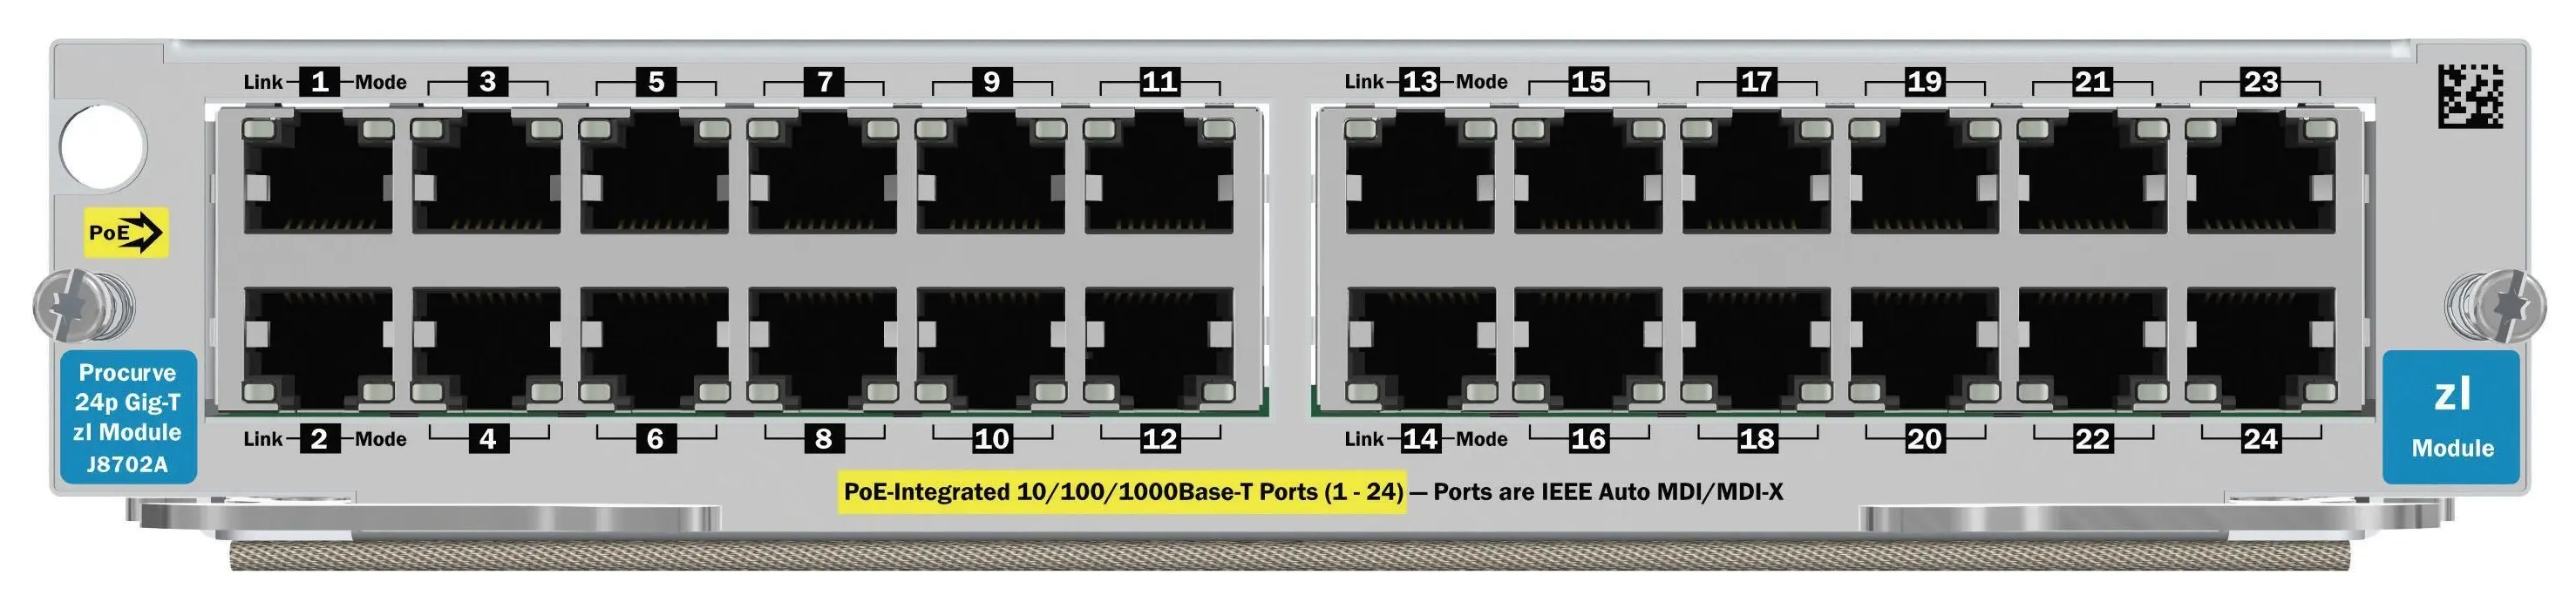 J8702AZ HP ProCurve 5400zl 24-Port 10/100/1000 PoE Integrated Switch Expansion Module